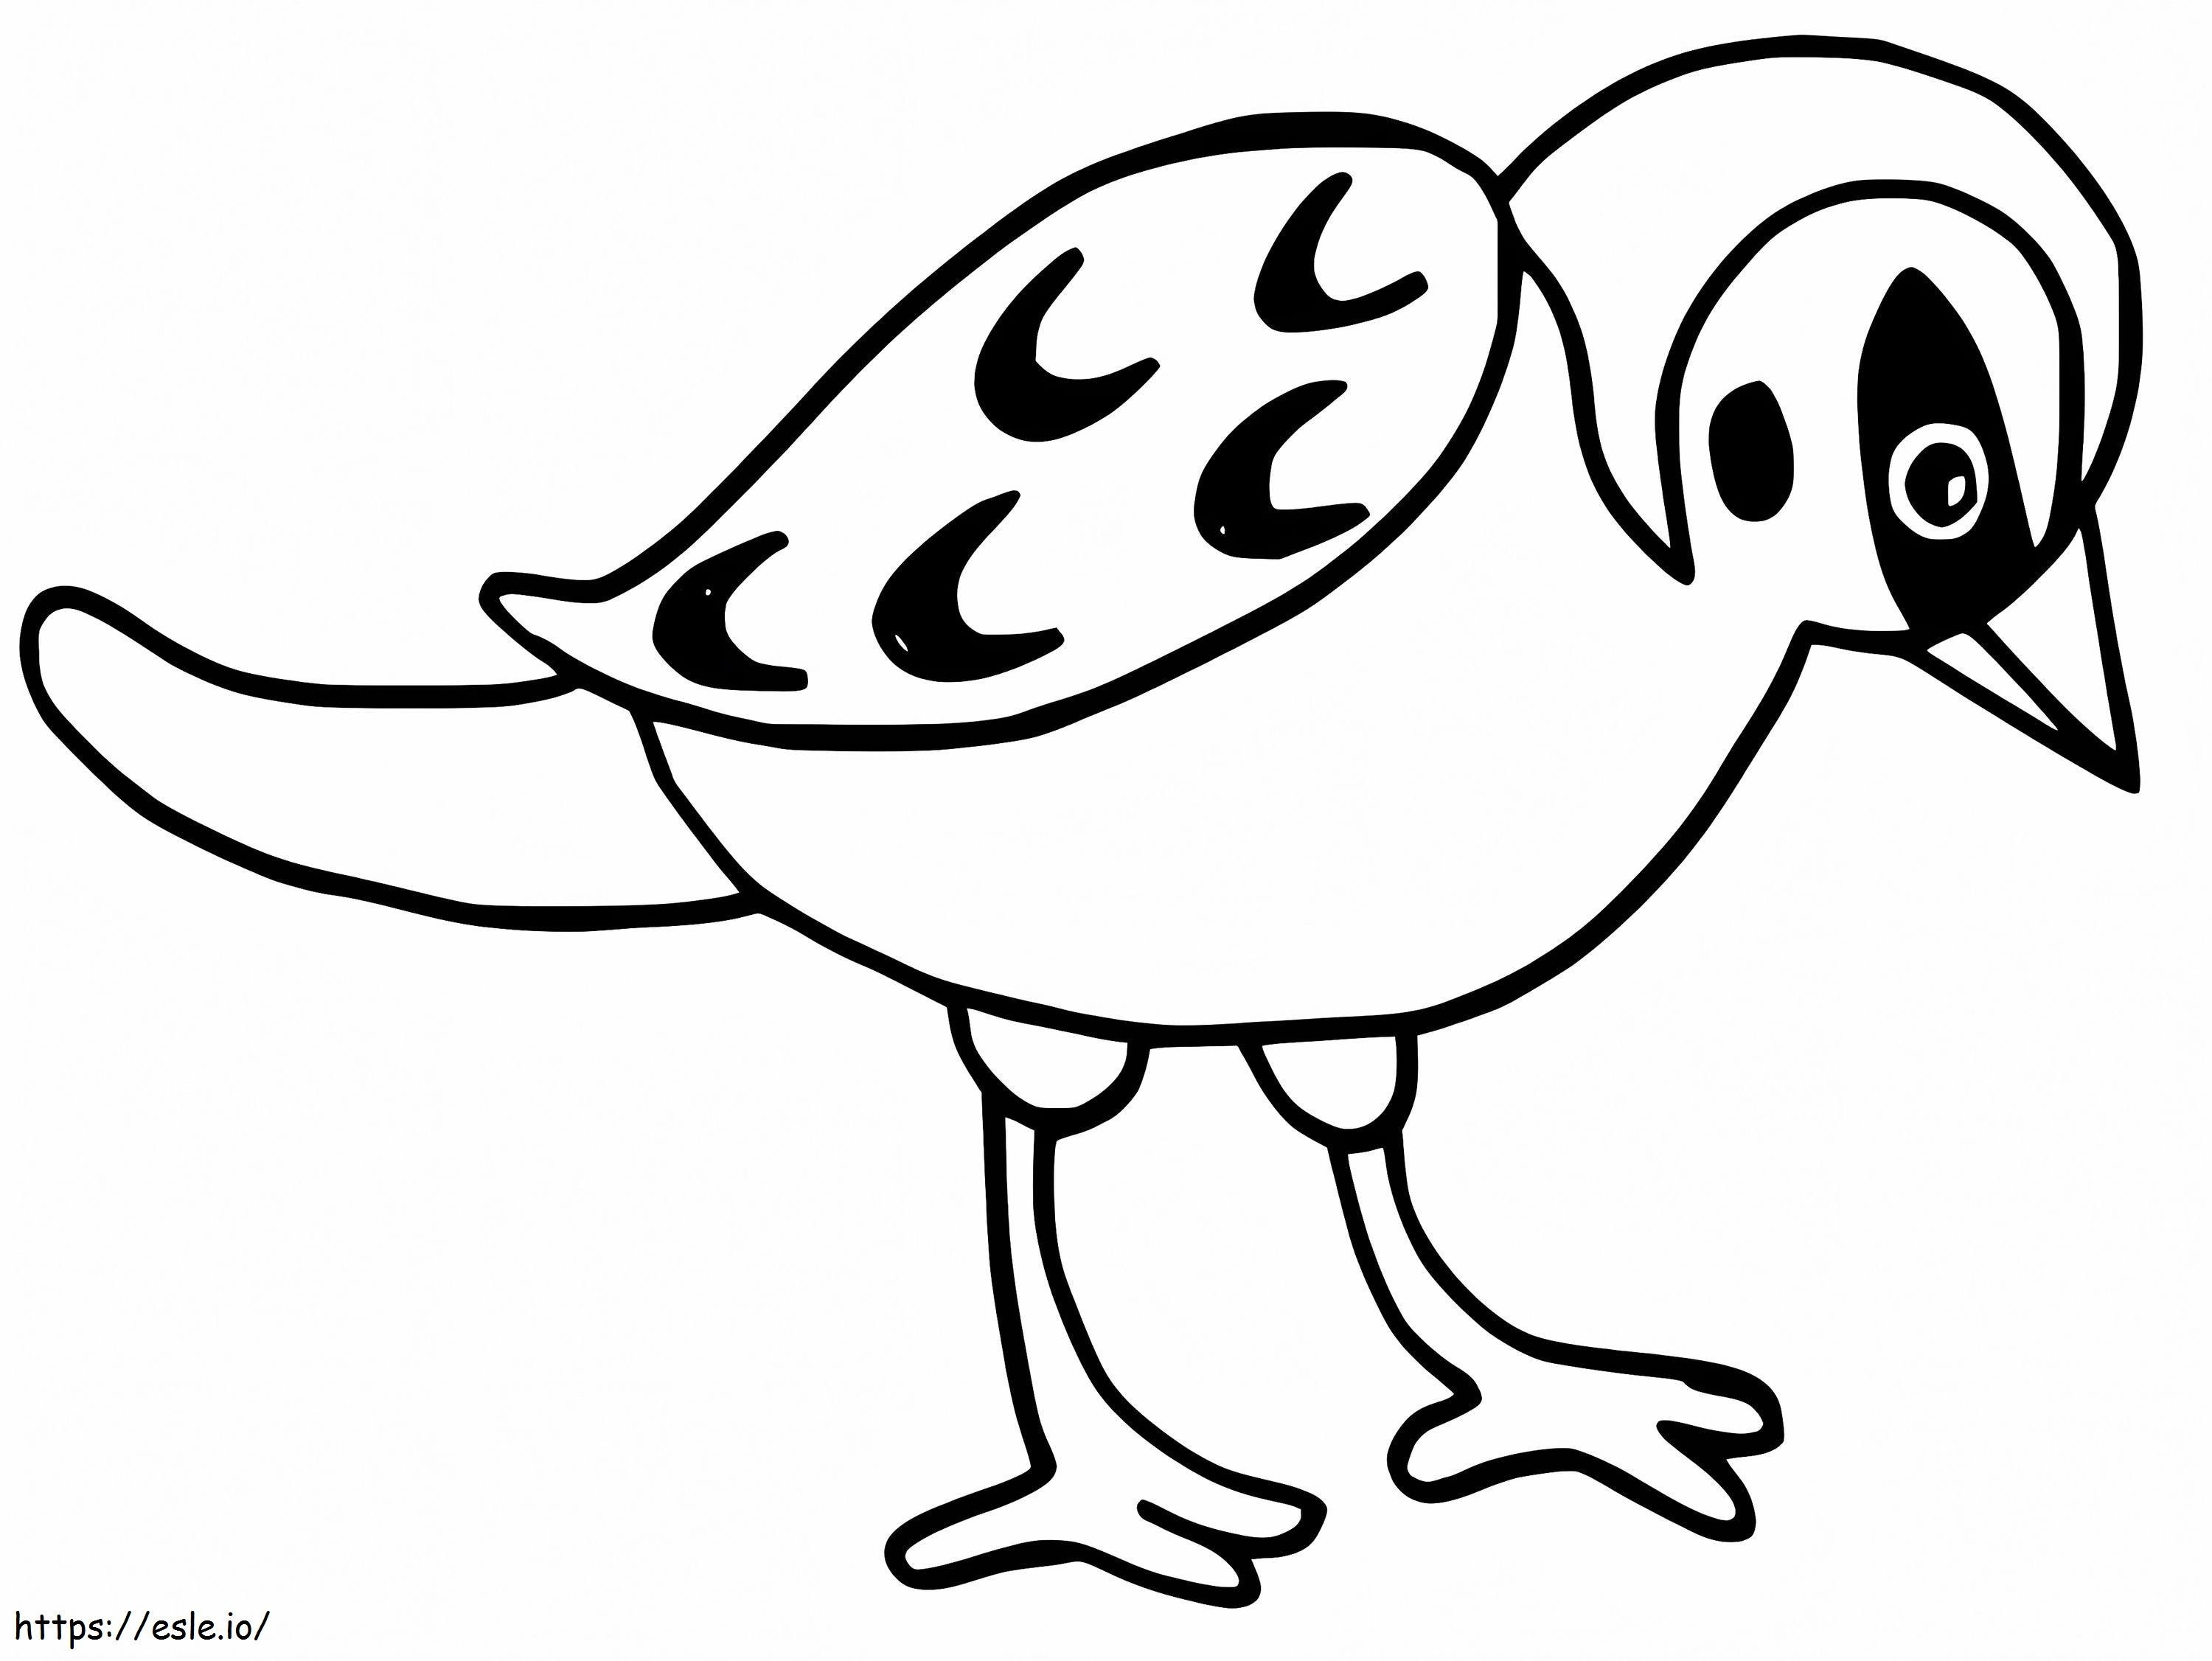 Sparrow 4 coloring page